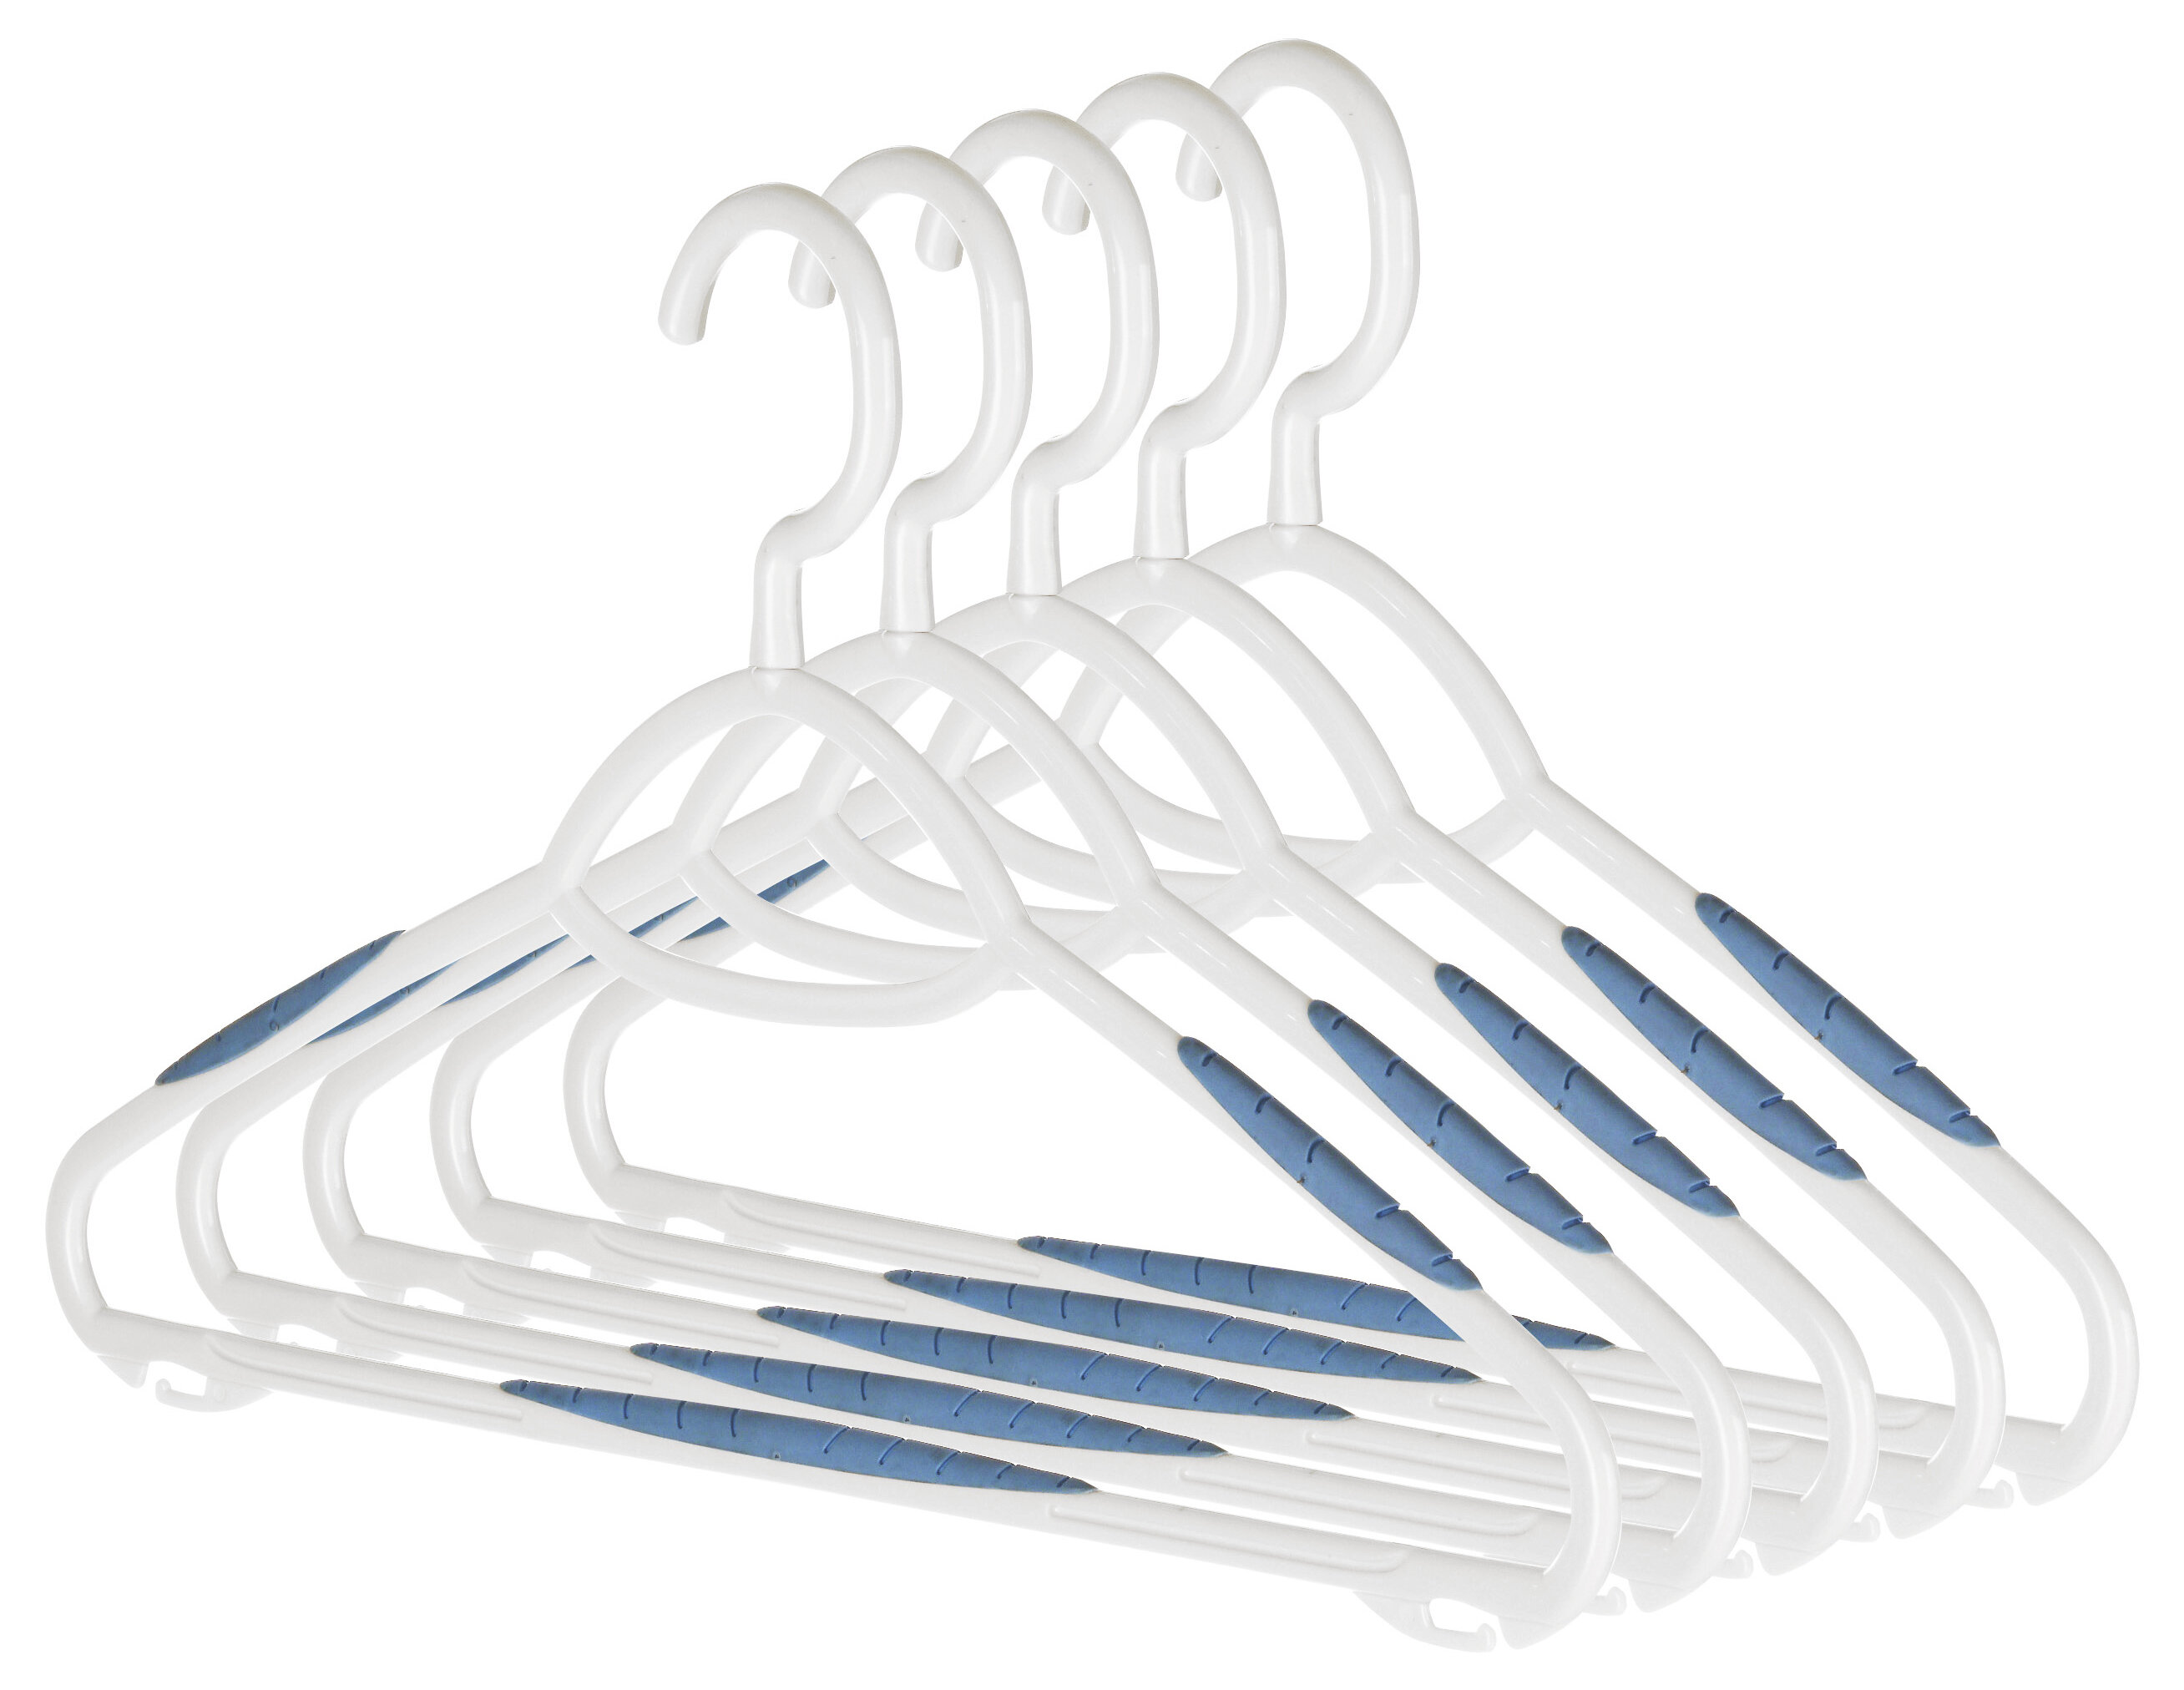 Mainstays Non-Slip Clothing Hangers, 30 Pack, White, Slim Durable